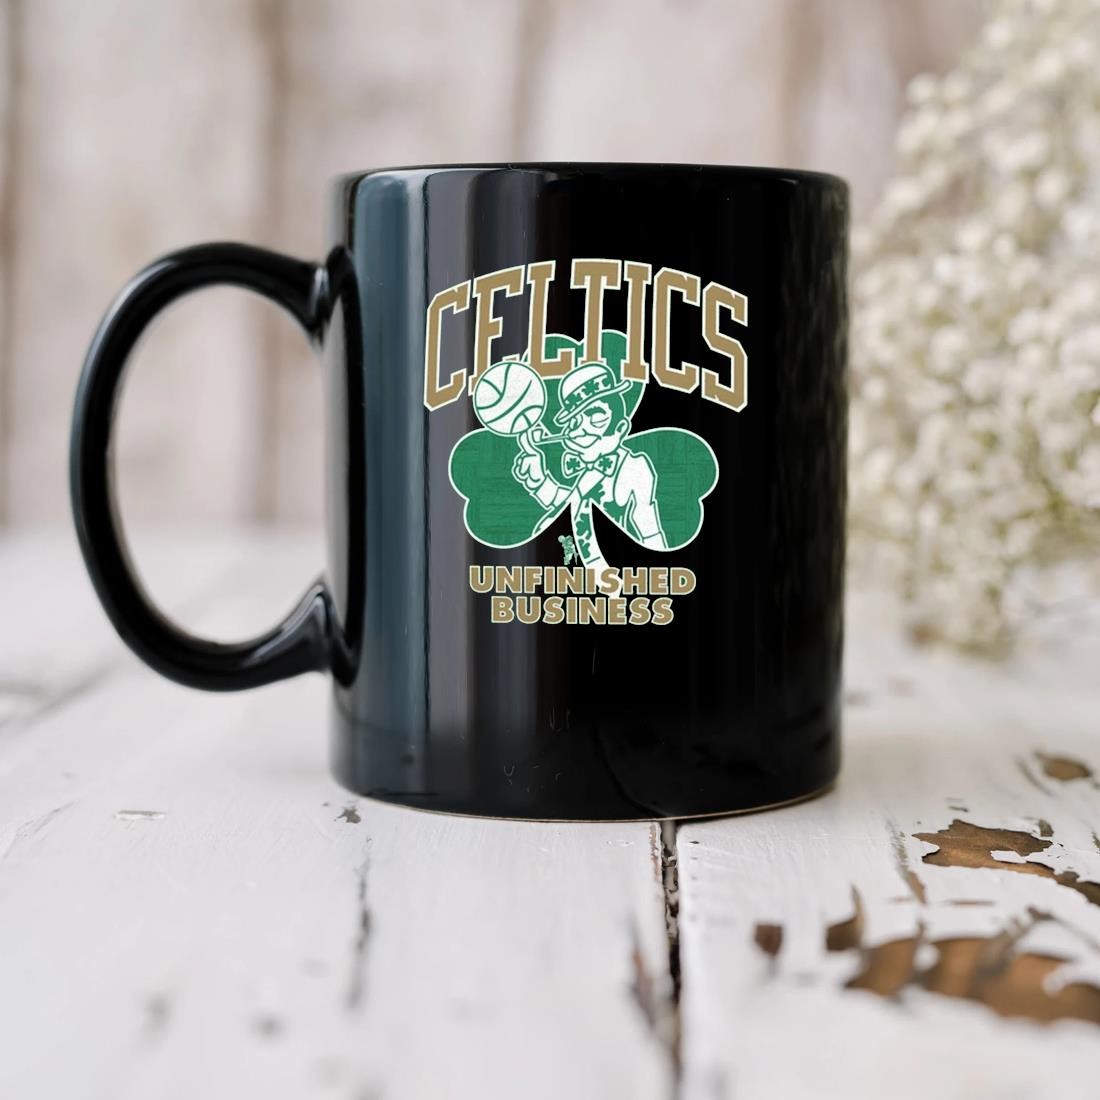 Original Nba Boston Celtics Unfinished Business Mug biu.jpg